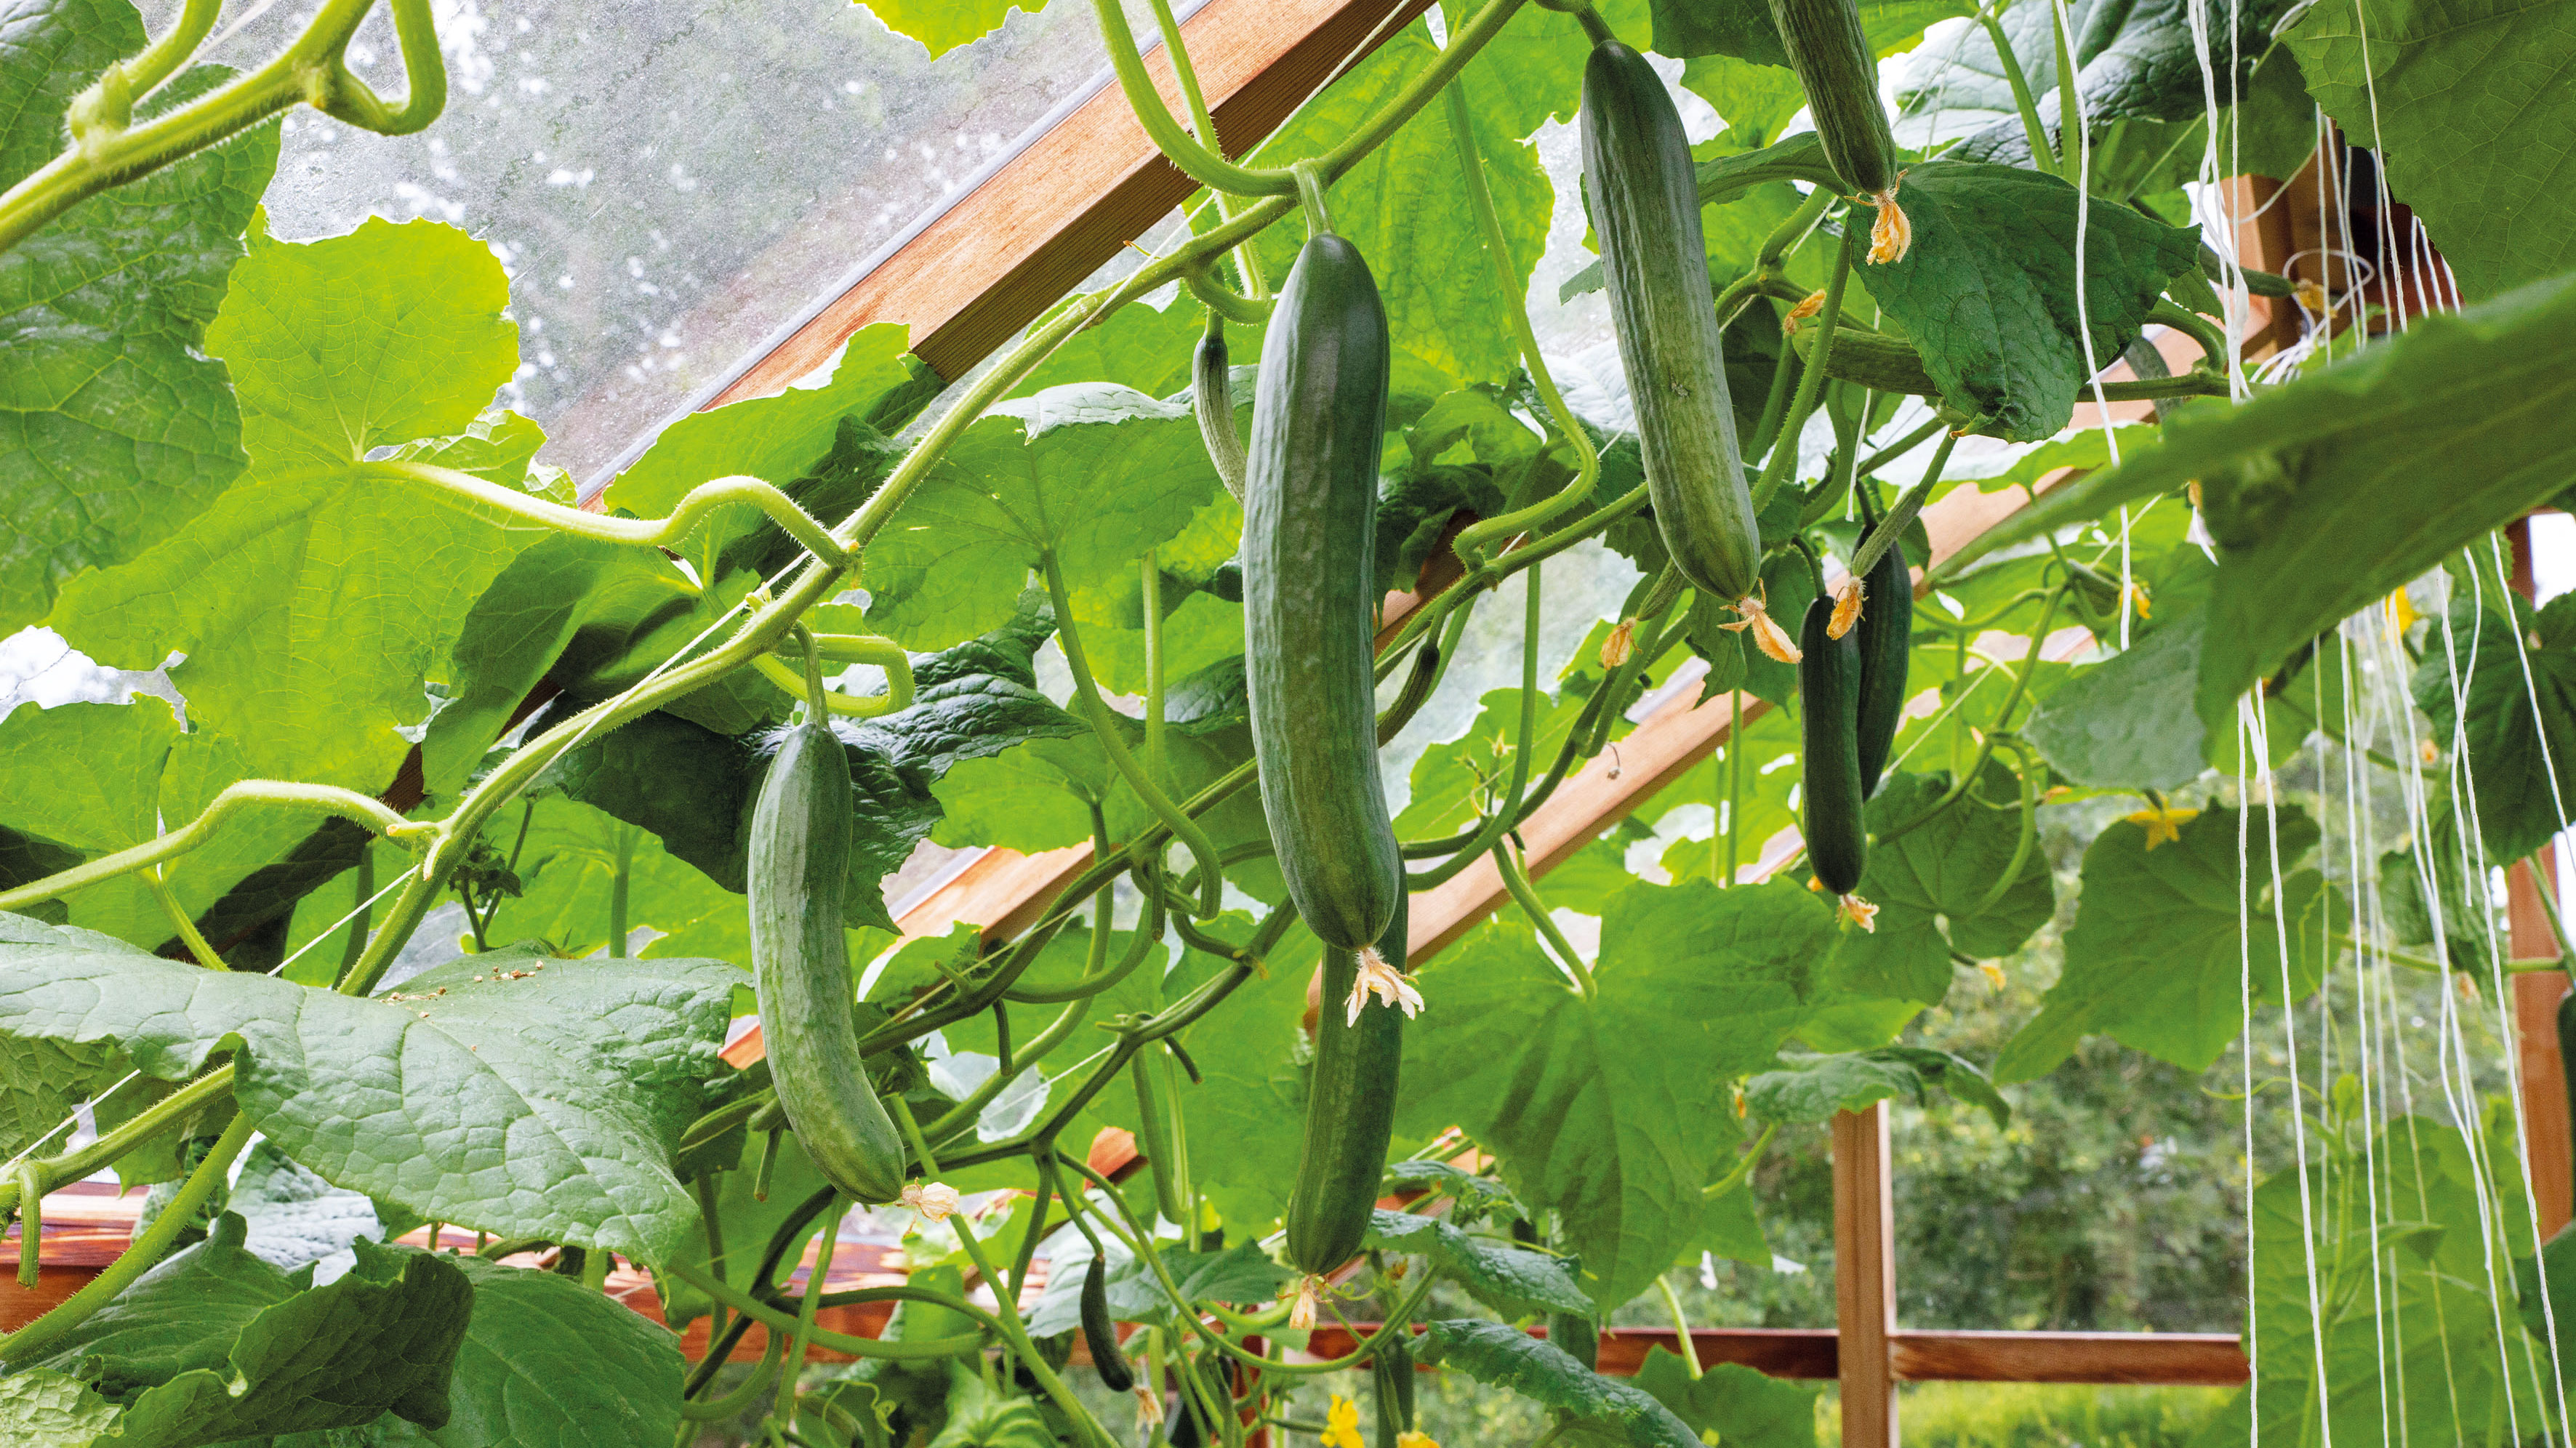 Image of Cucumbers and oregano